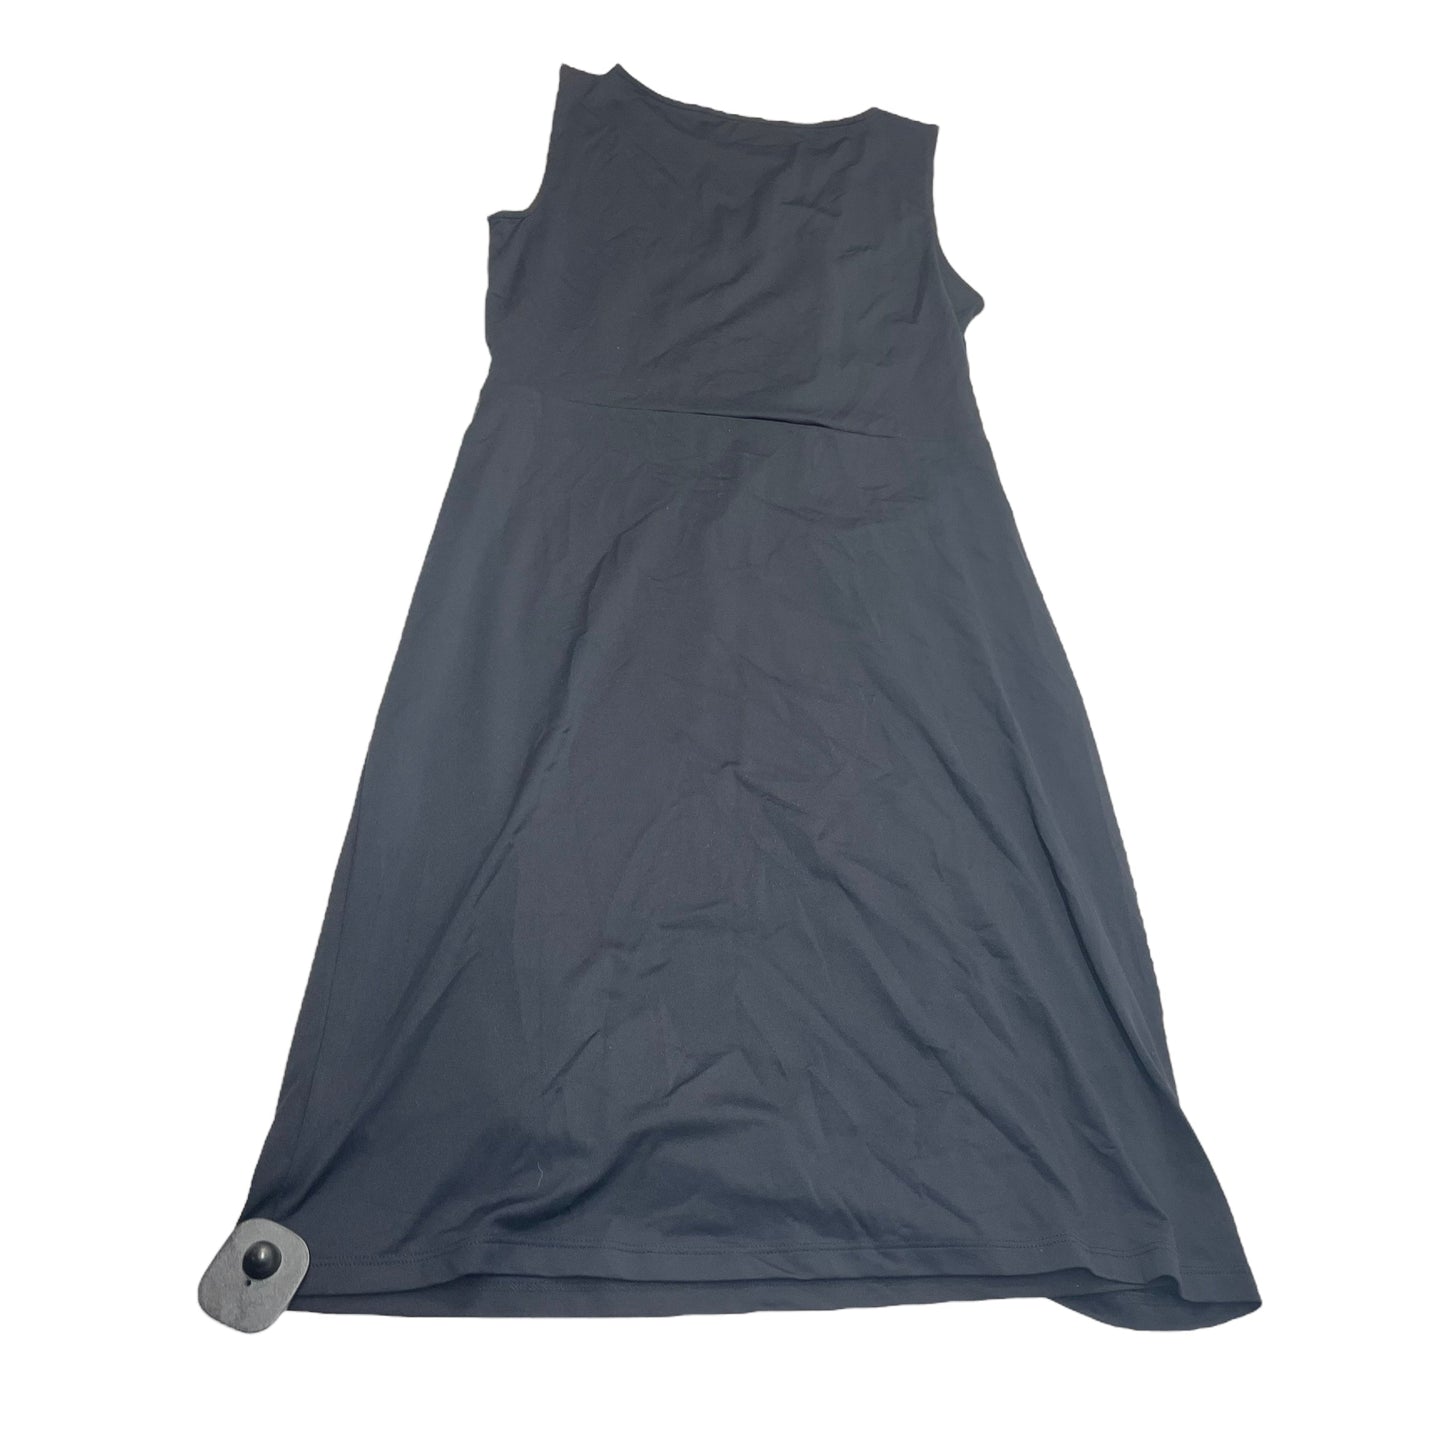 Dress Casual Short By Talbots  Size: Petite  Medium